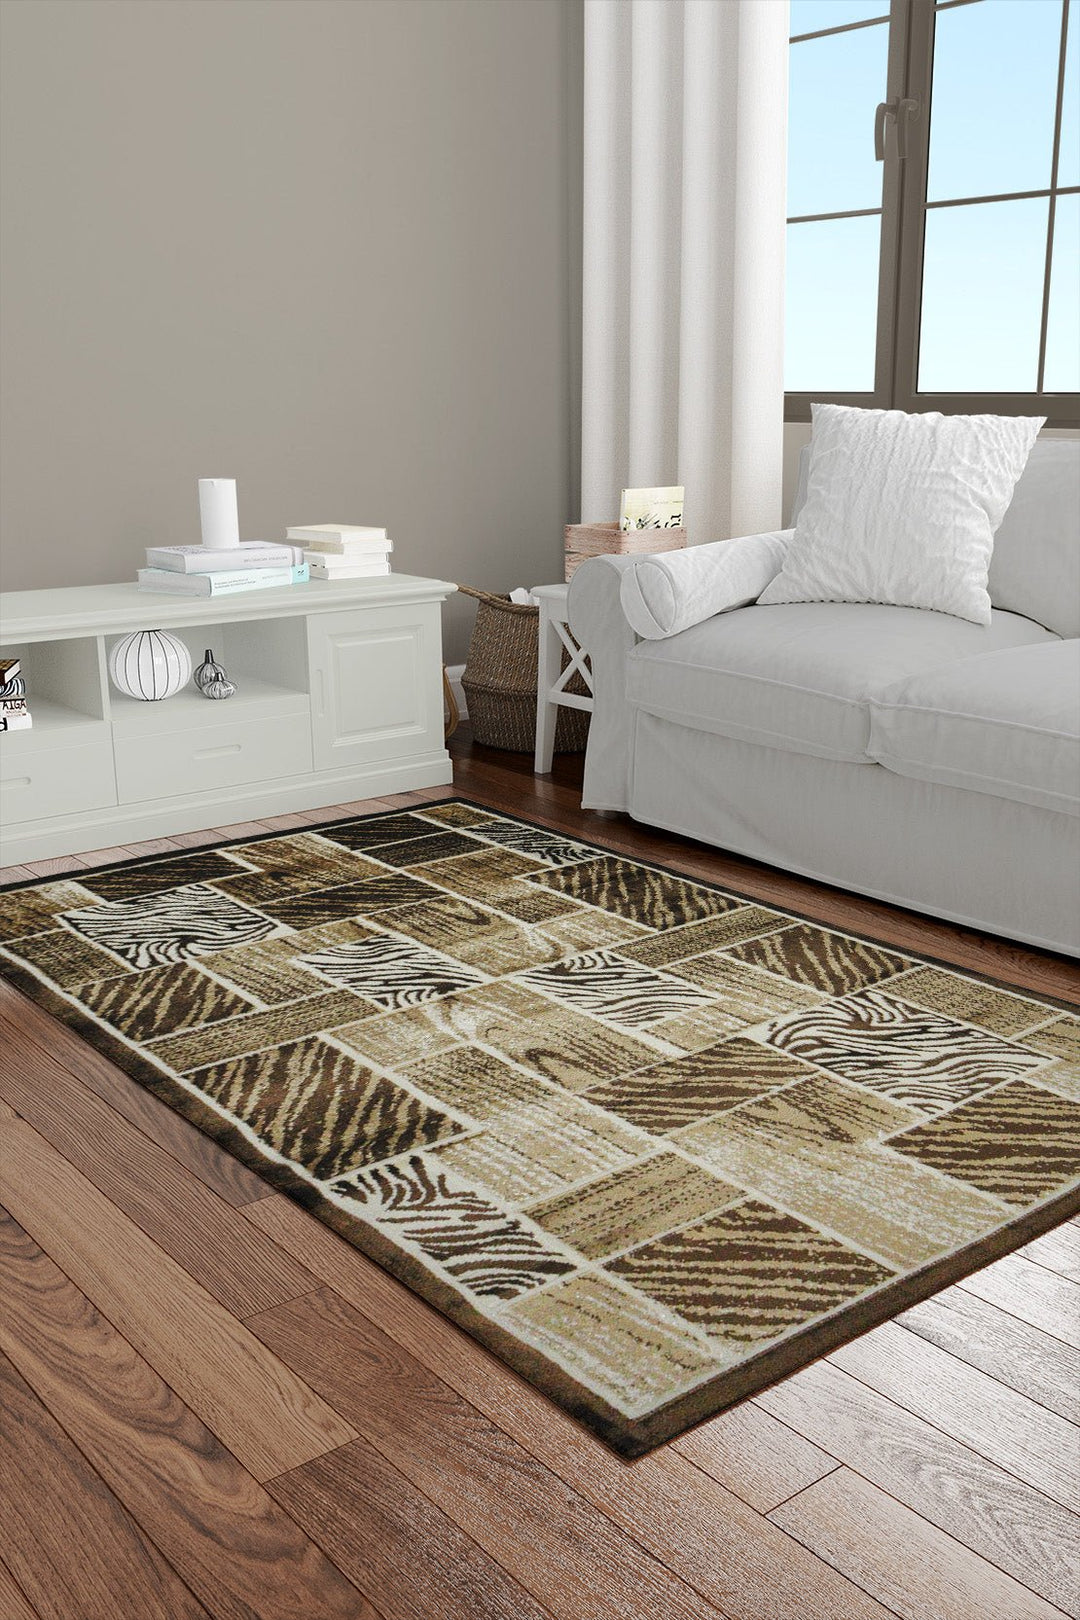 Classical and Traditional Design - 4.1 x 5.5 FT - Brown - Indigo Rug - Superior Elegant Rug for Living Room - V Surfaces